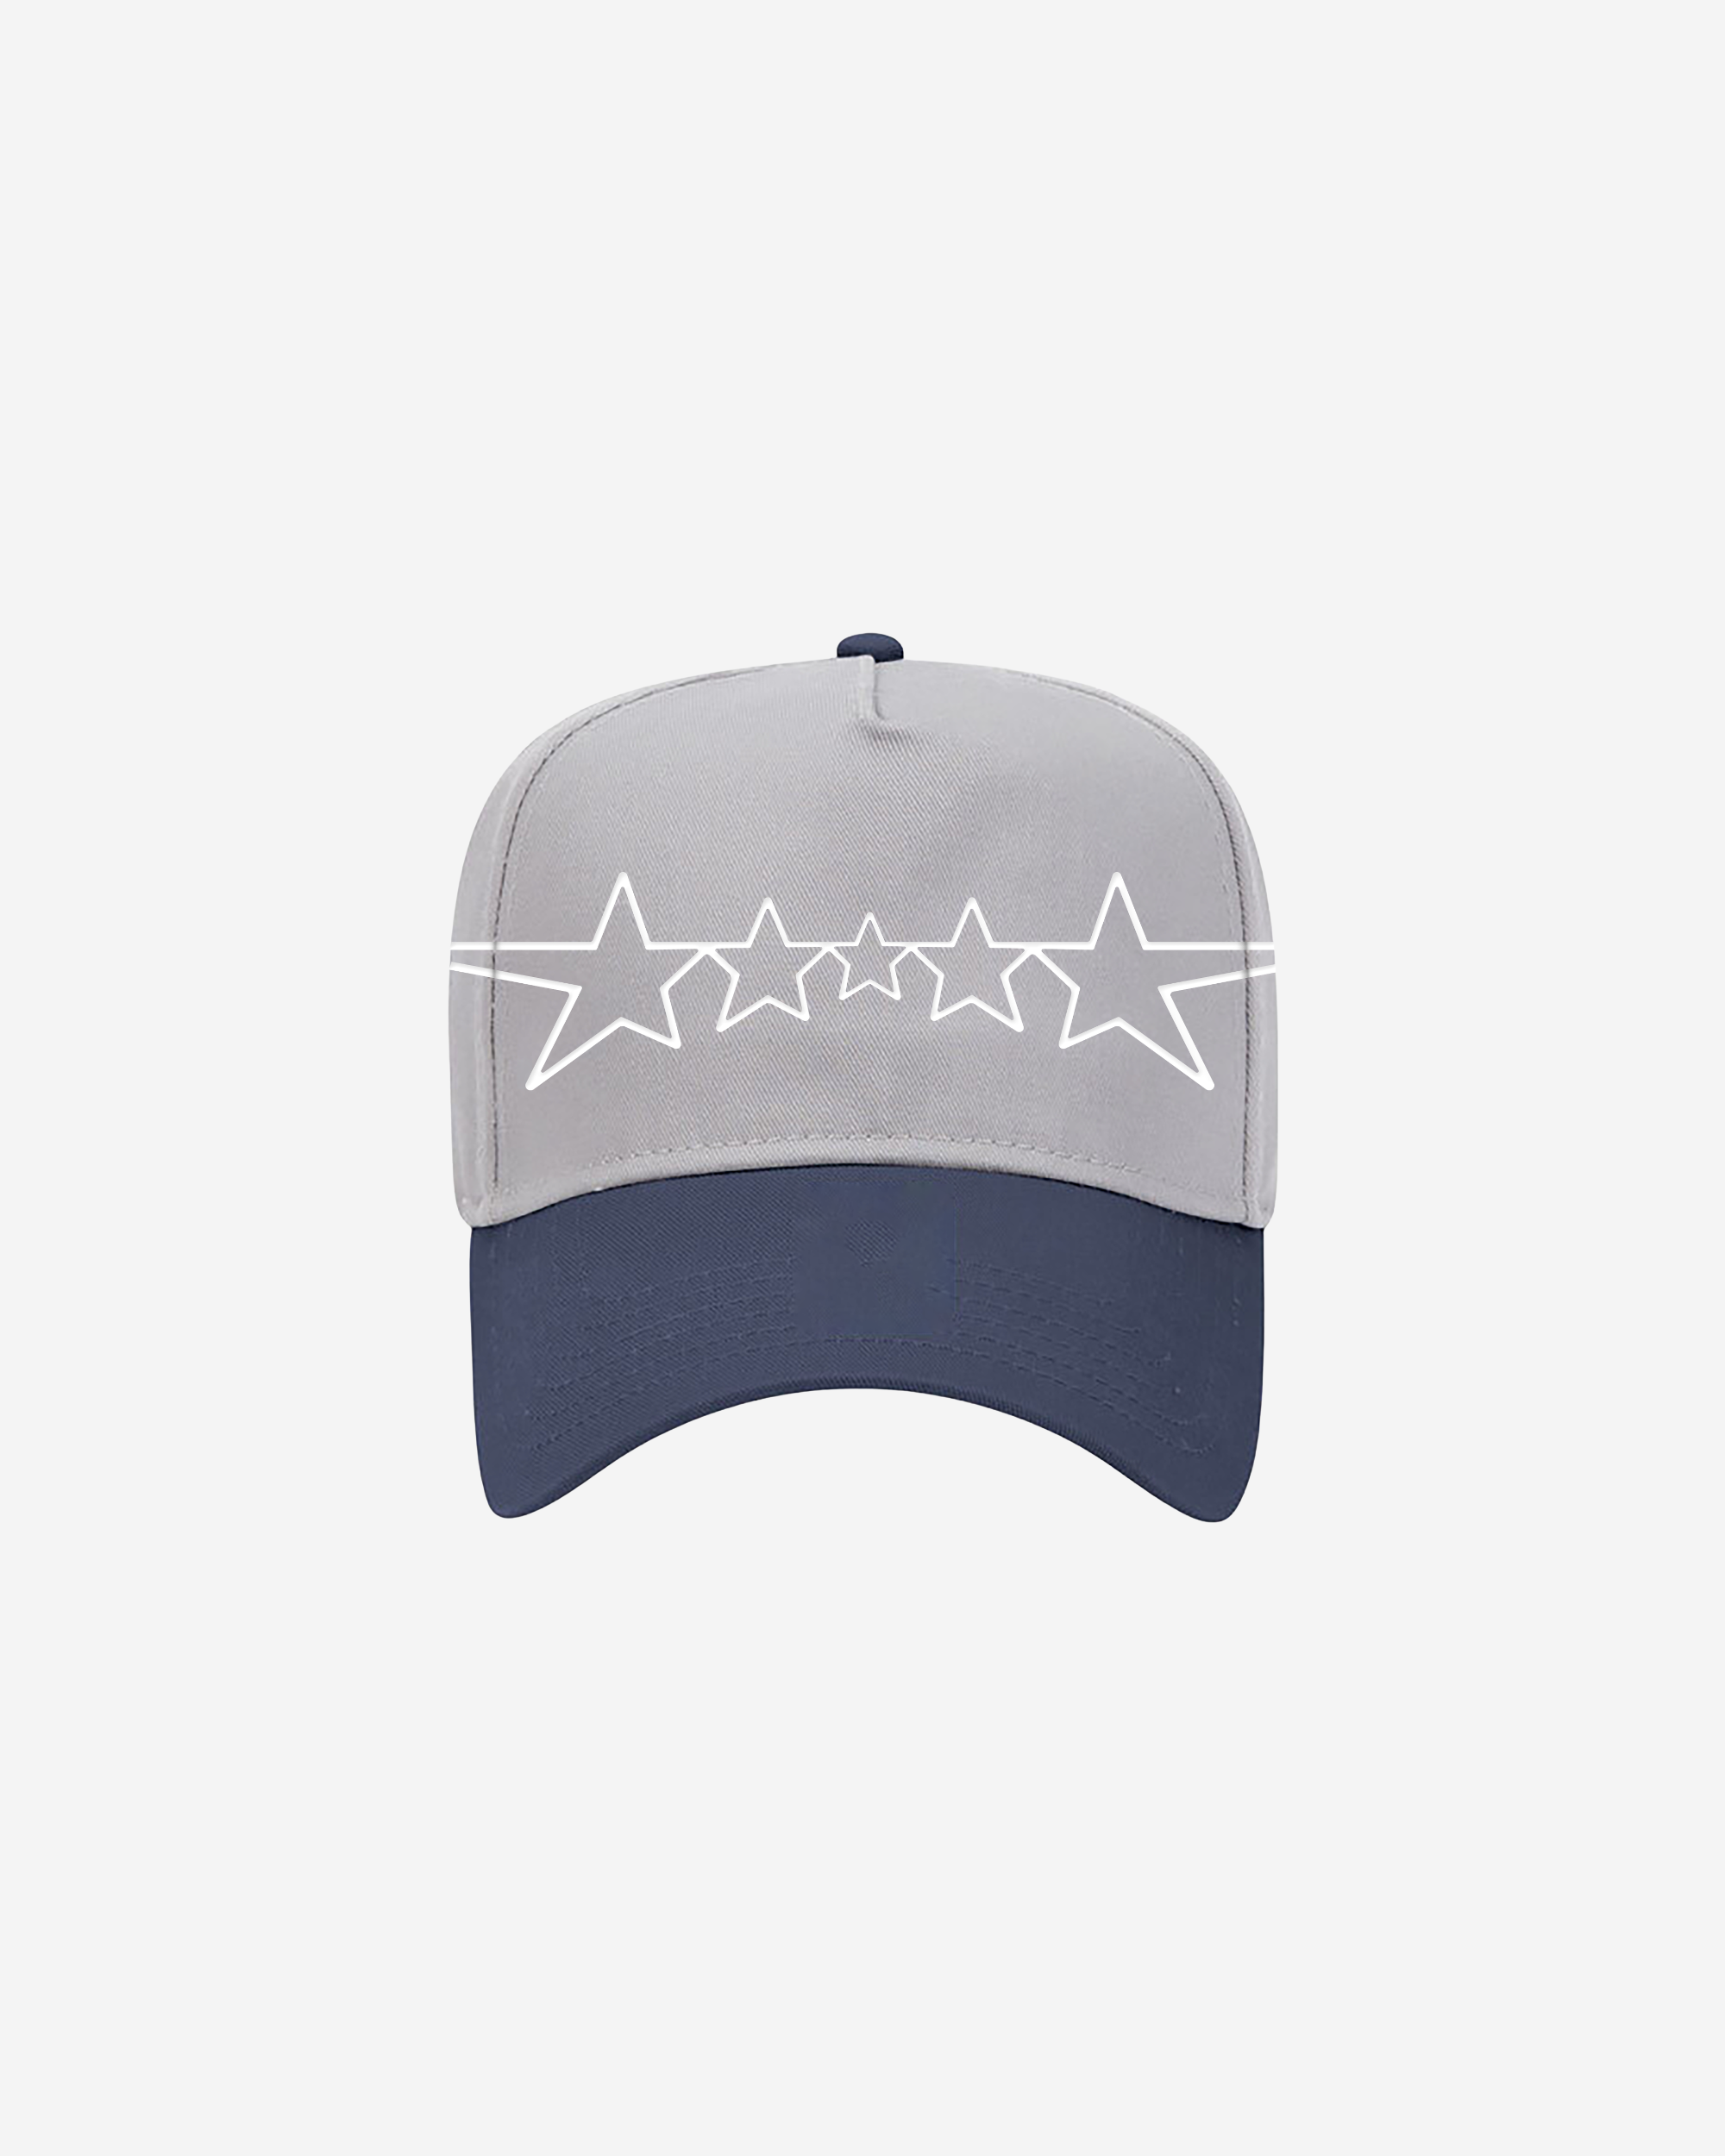 Aligned Stars Snapback Hat